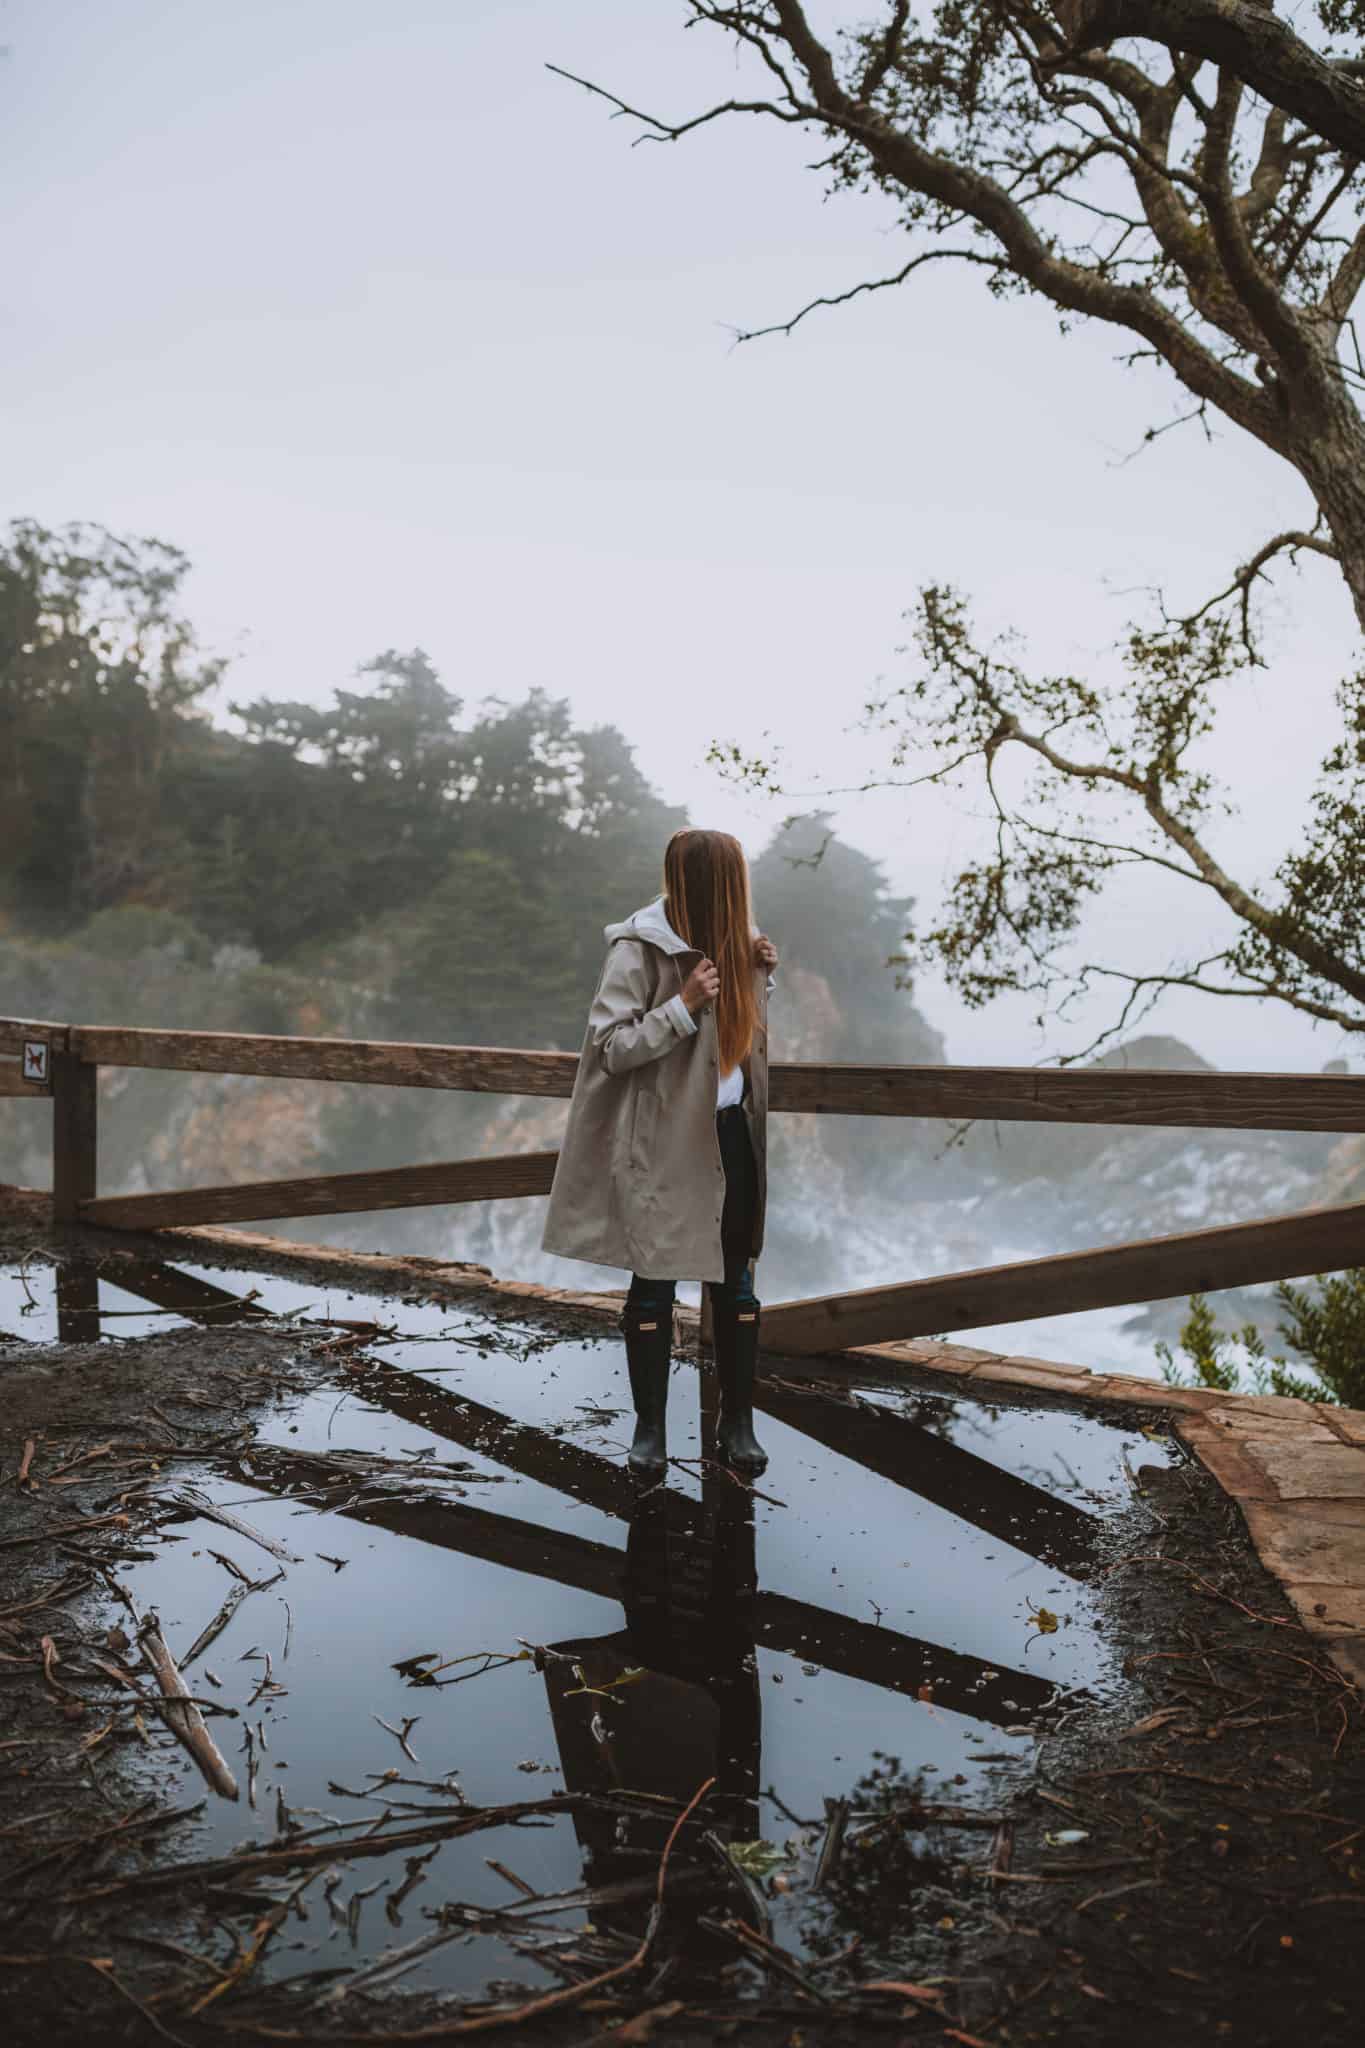 Emily in Rain Jacket McWay Falls Big Sur